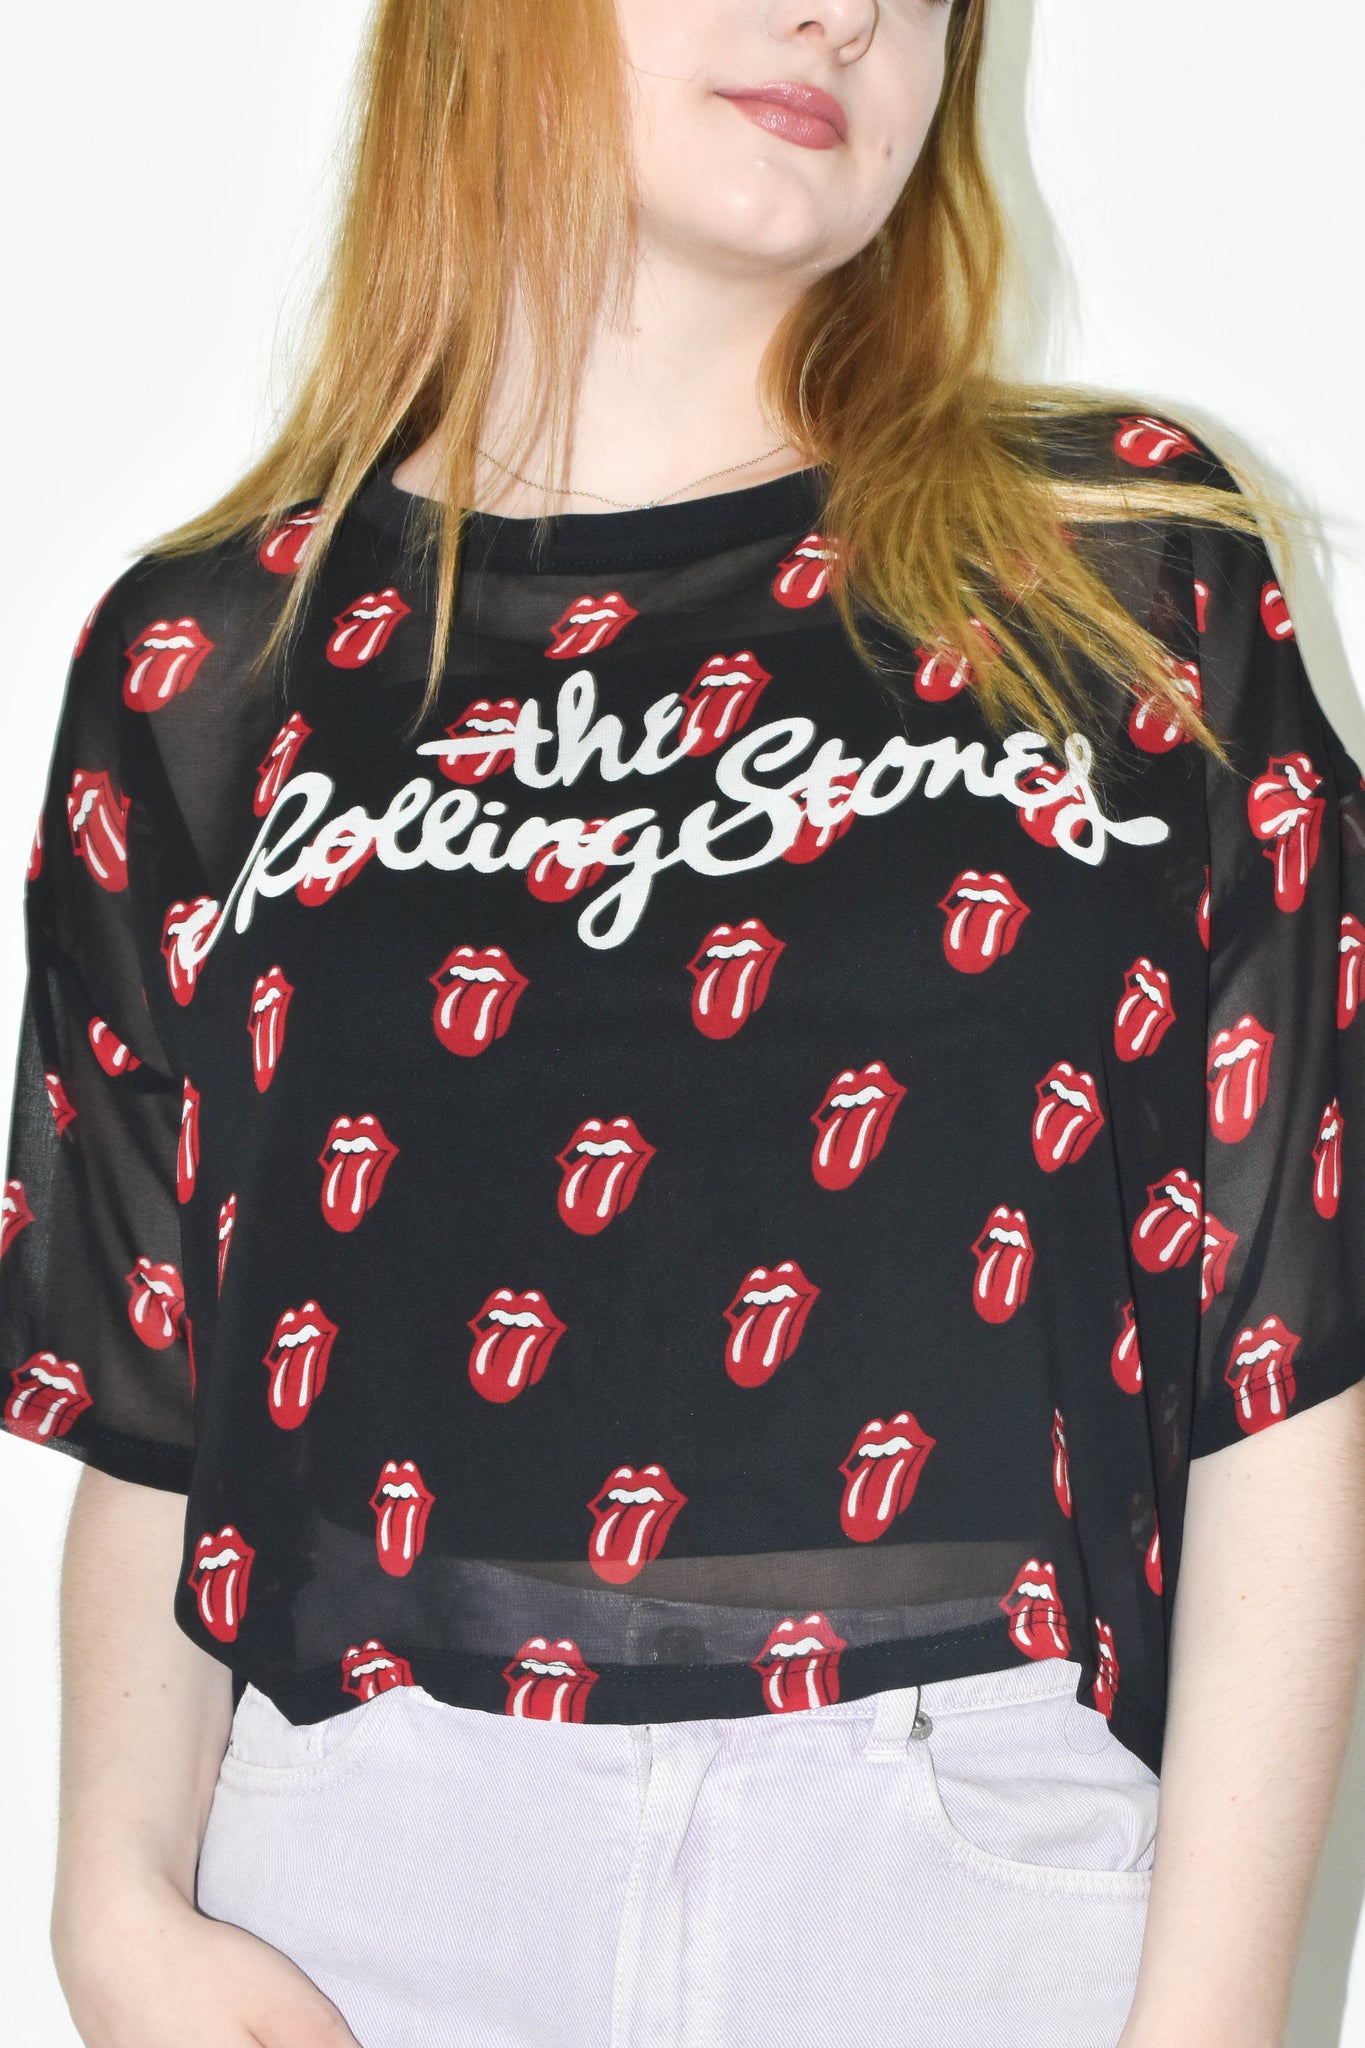 BERSHKA - Blusa Transparente Estampado Rolling Stones